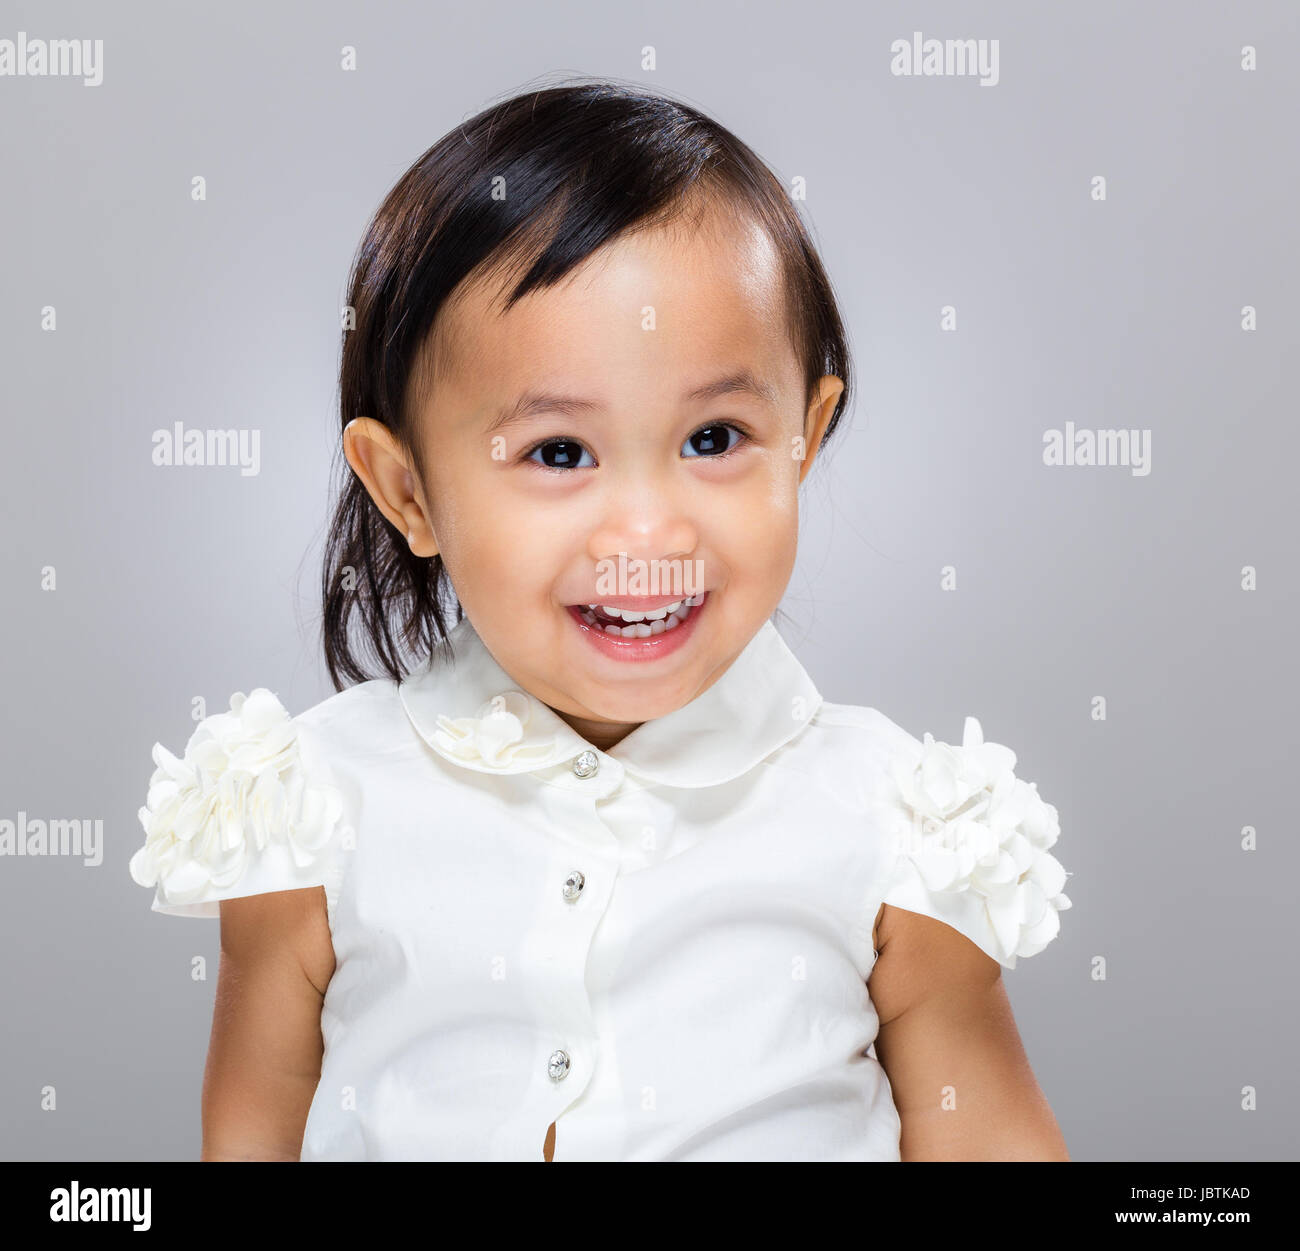 Baby girl smile Stock Photo - Alamy